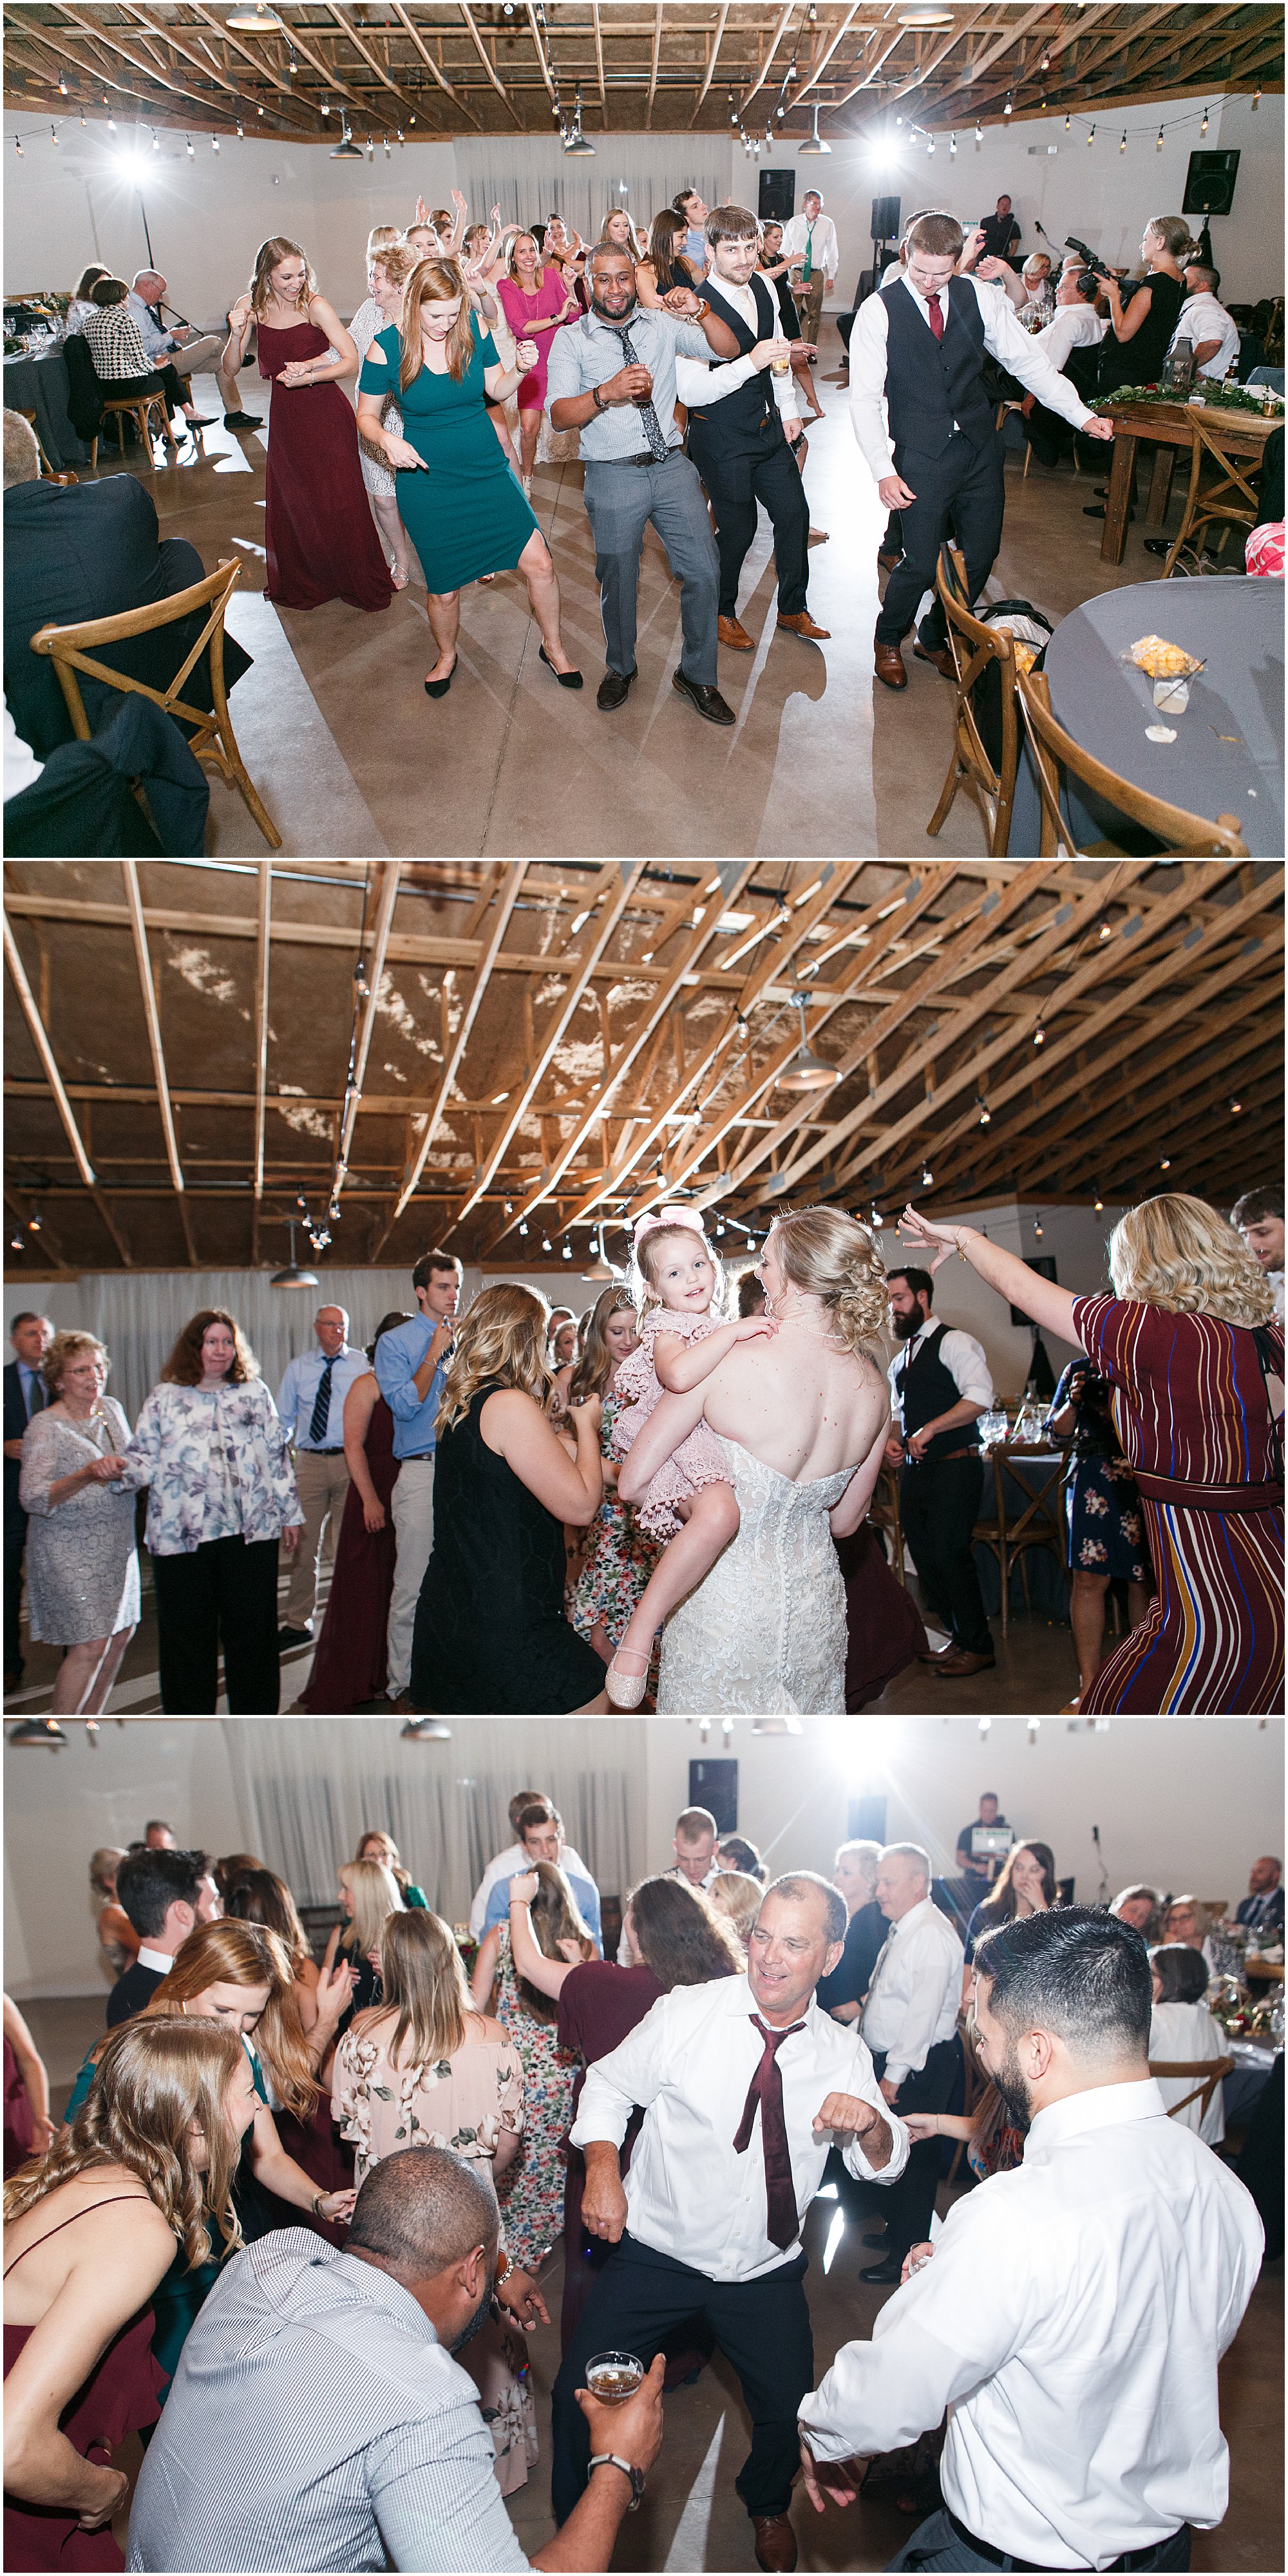 Wedding guests dancing at reception